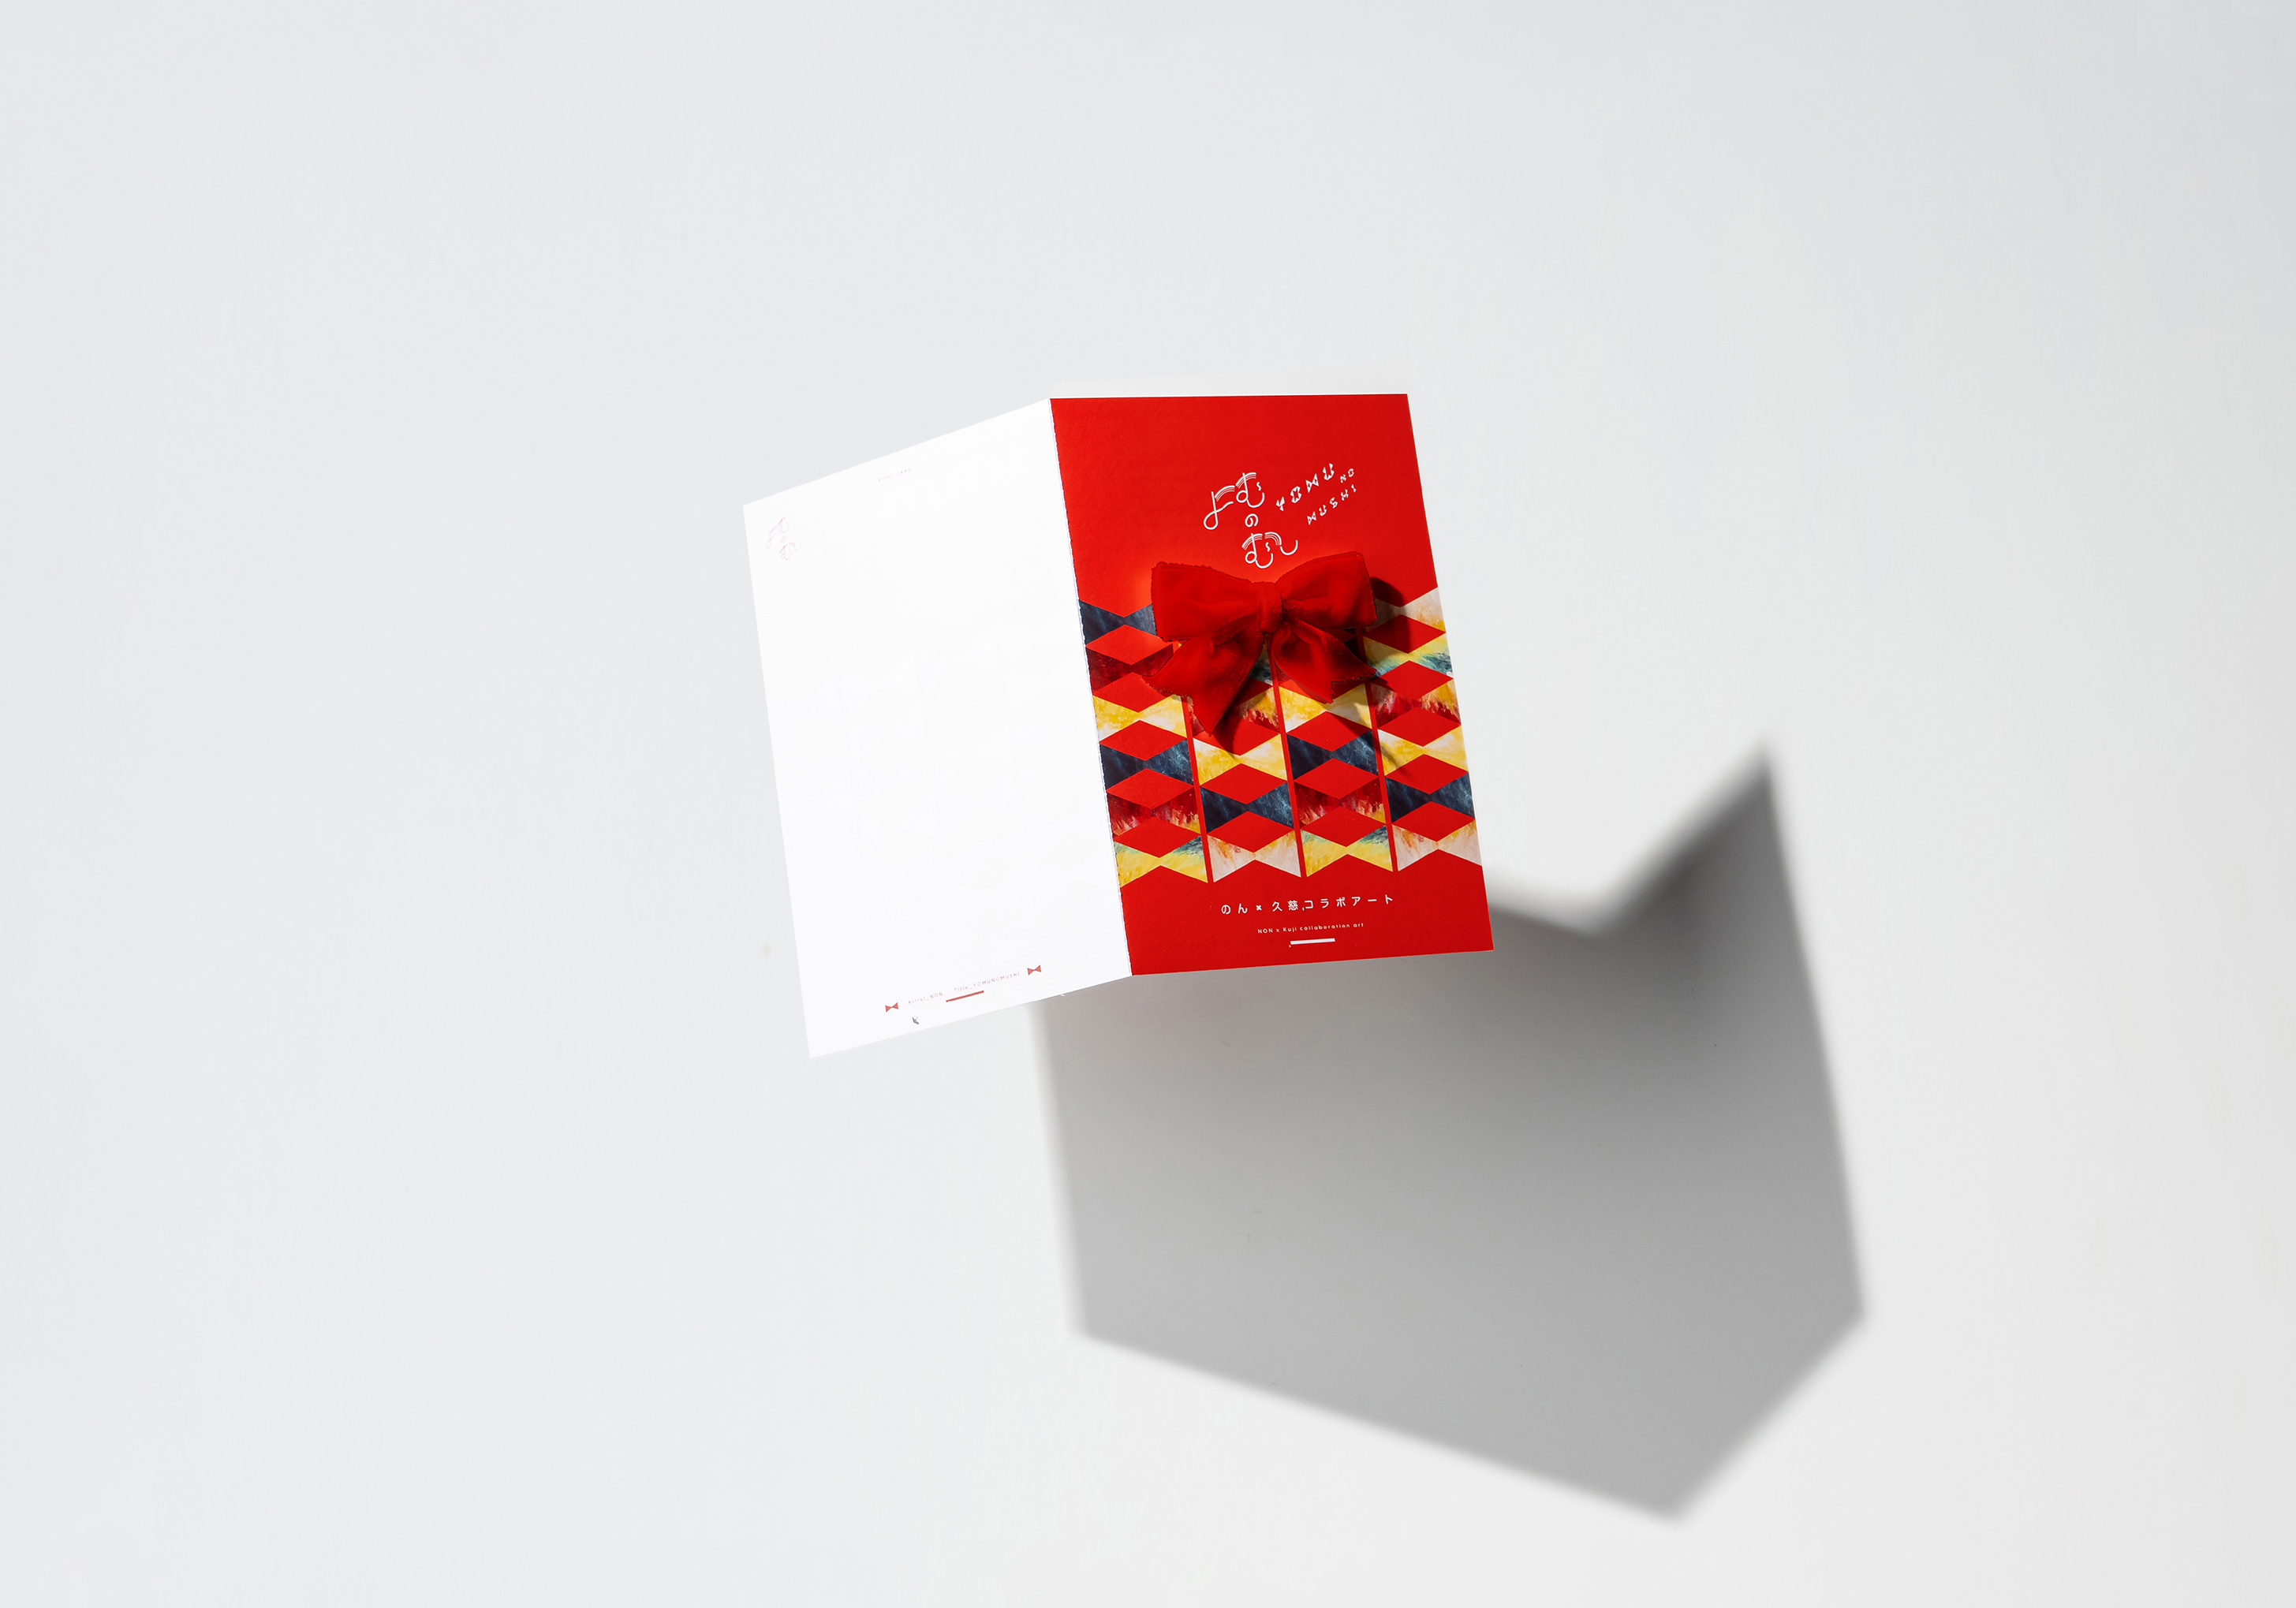 YOMUNOSU /「YOMUNOMUSHI」Card
久慈市情報交流センター /「よむのむし」カード